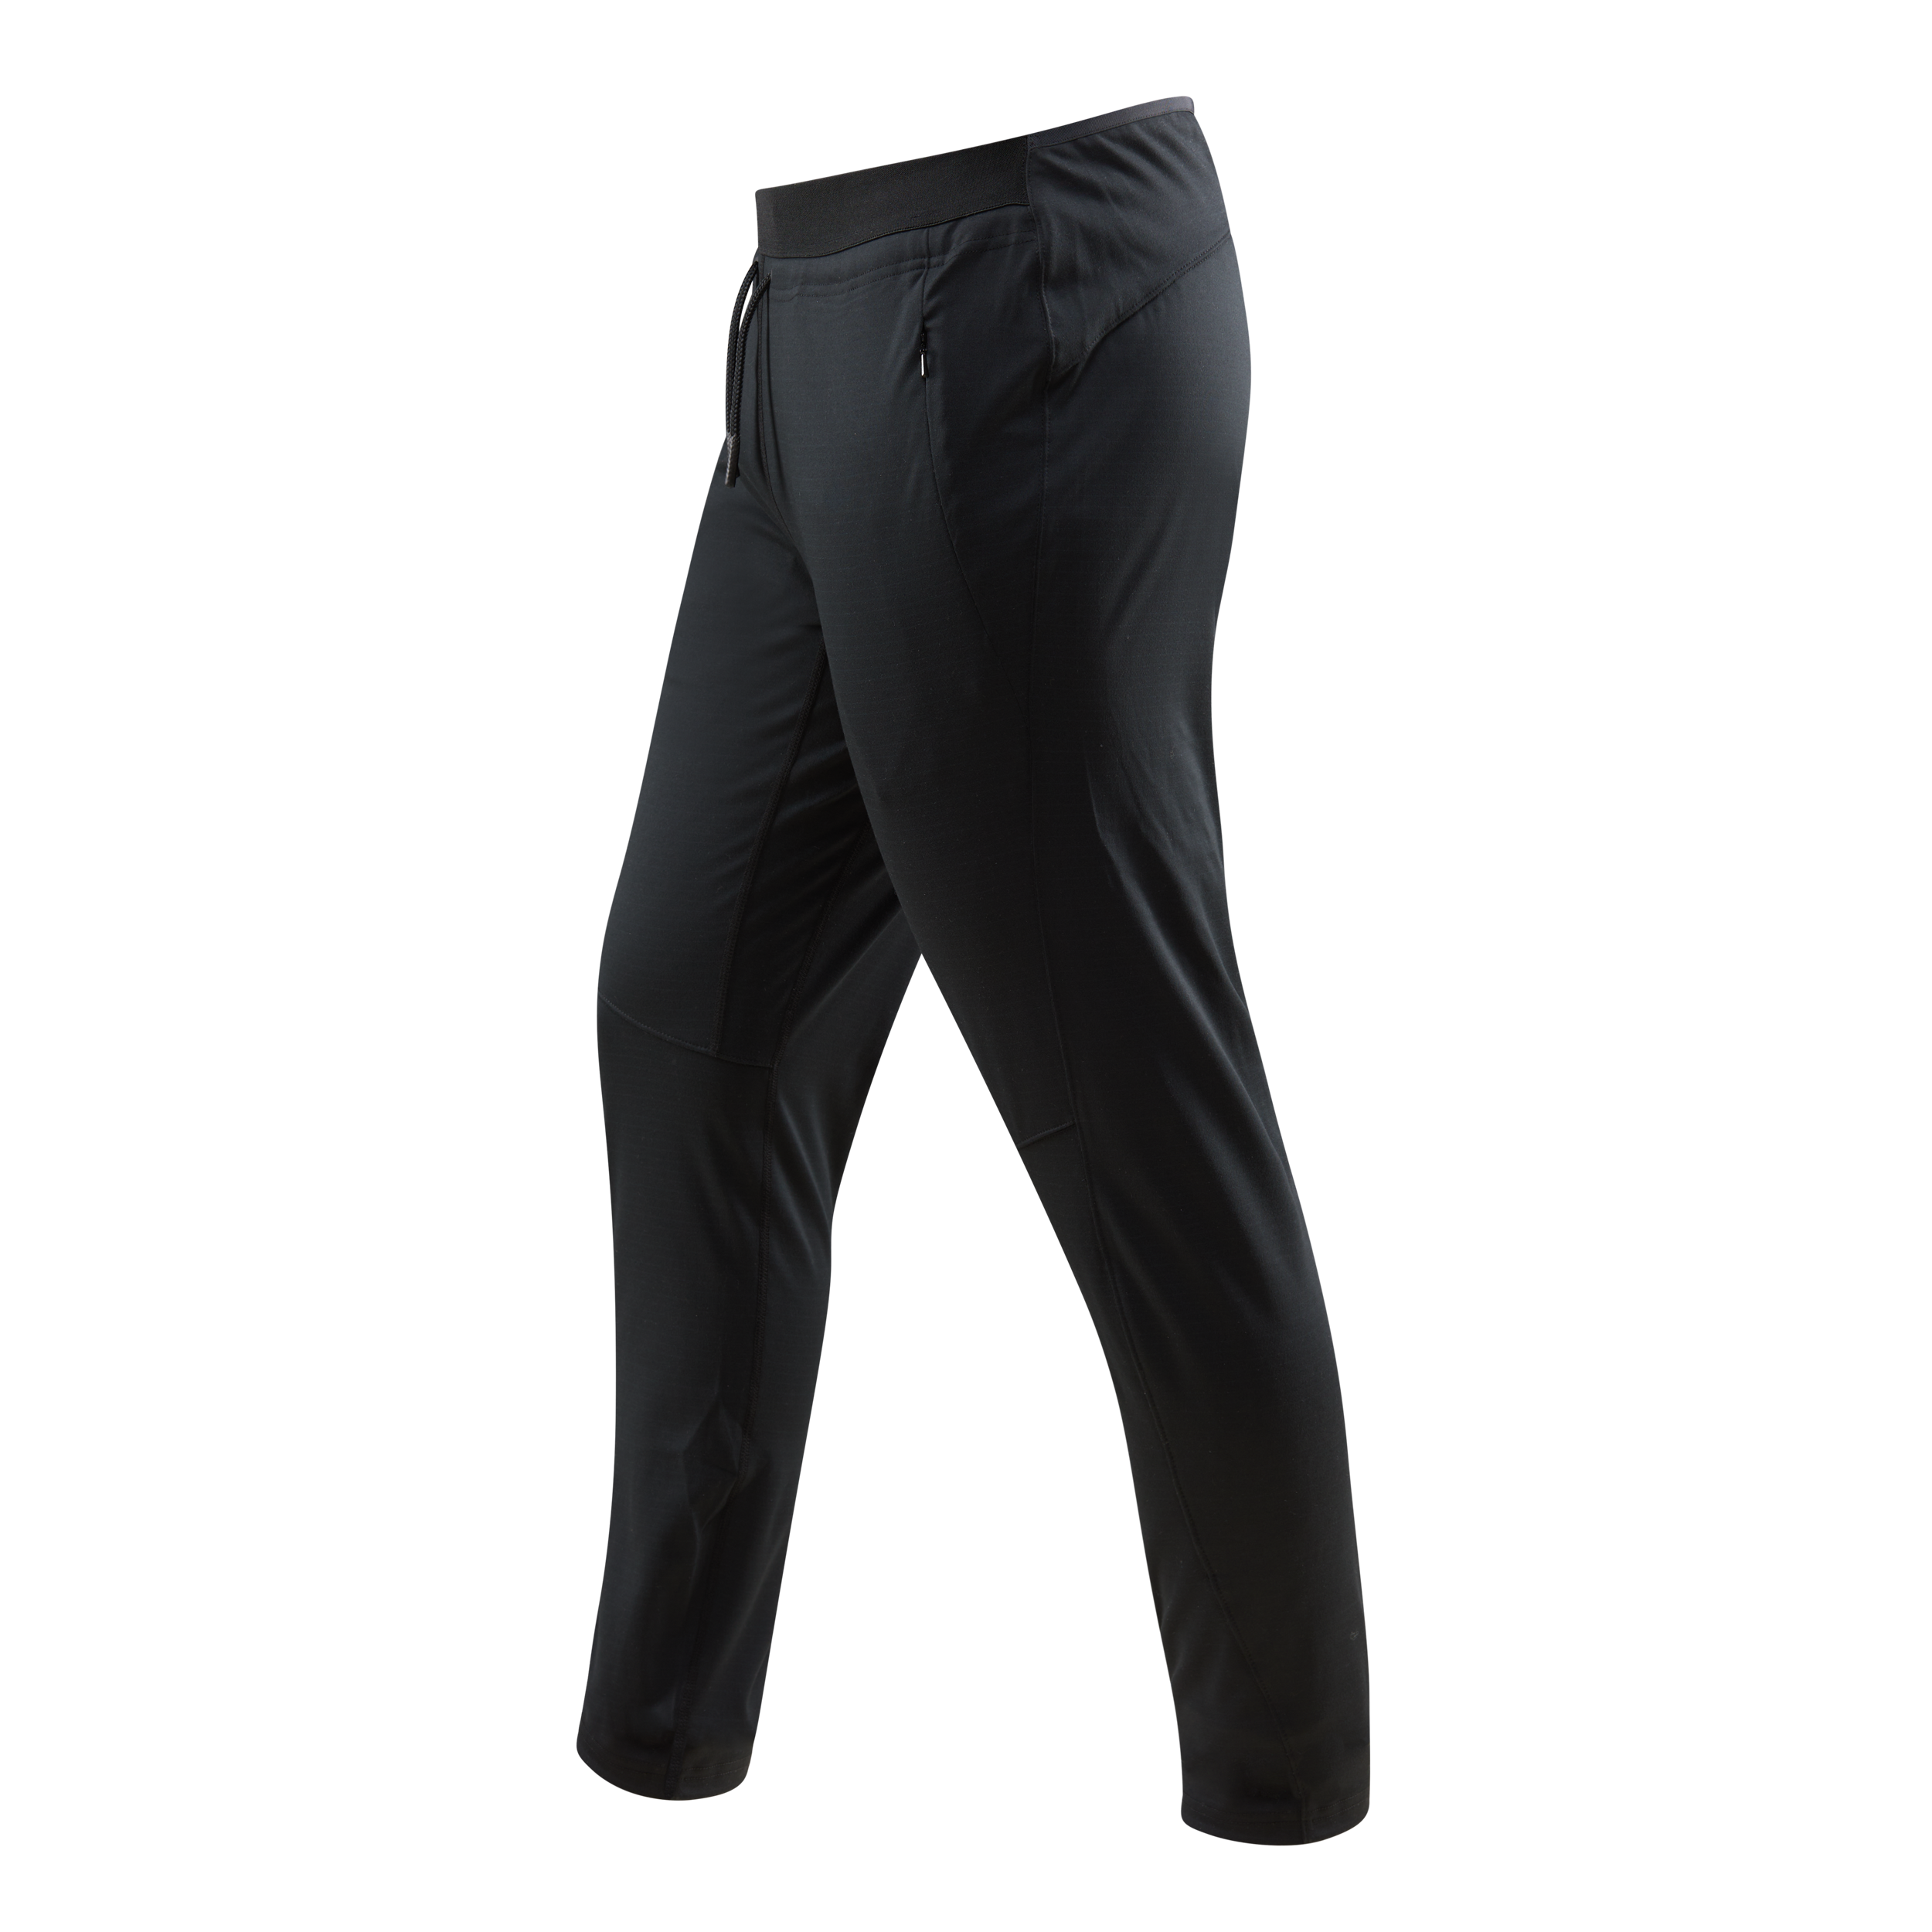 New Nike Dri-Fit Lightweight Wind Resistant Training Women's Pants